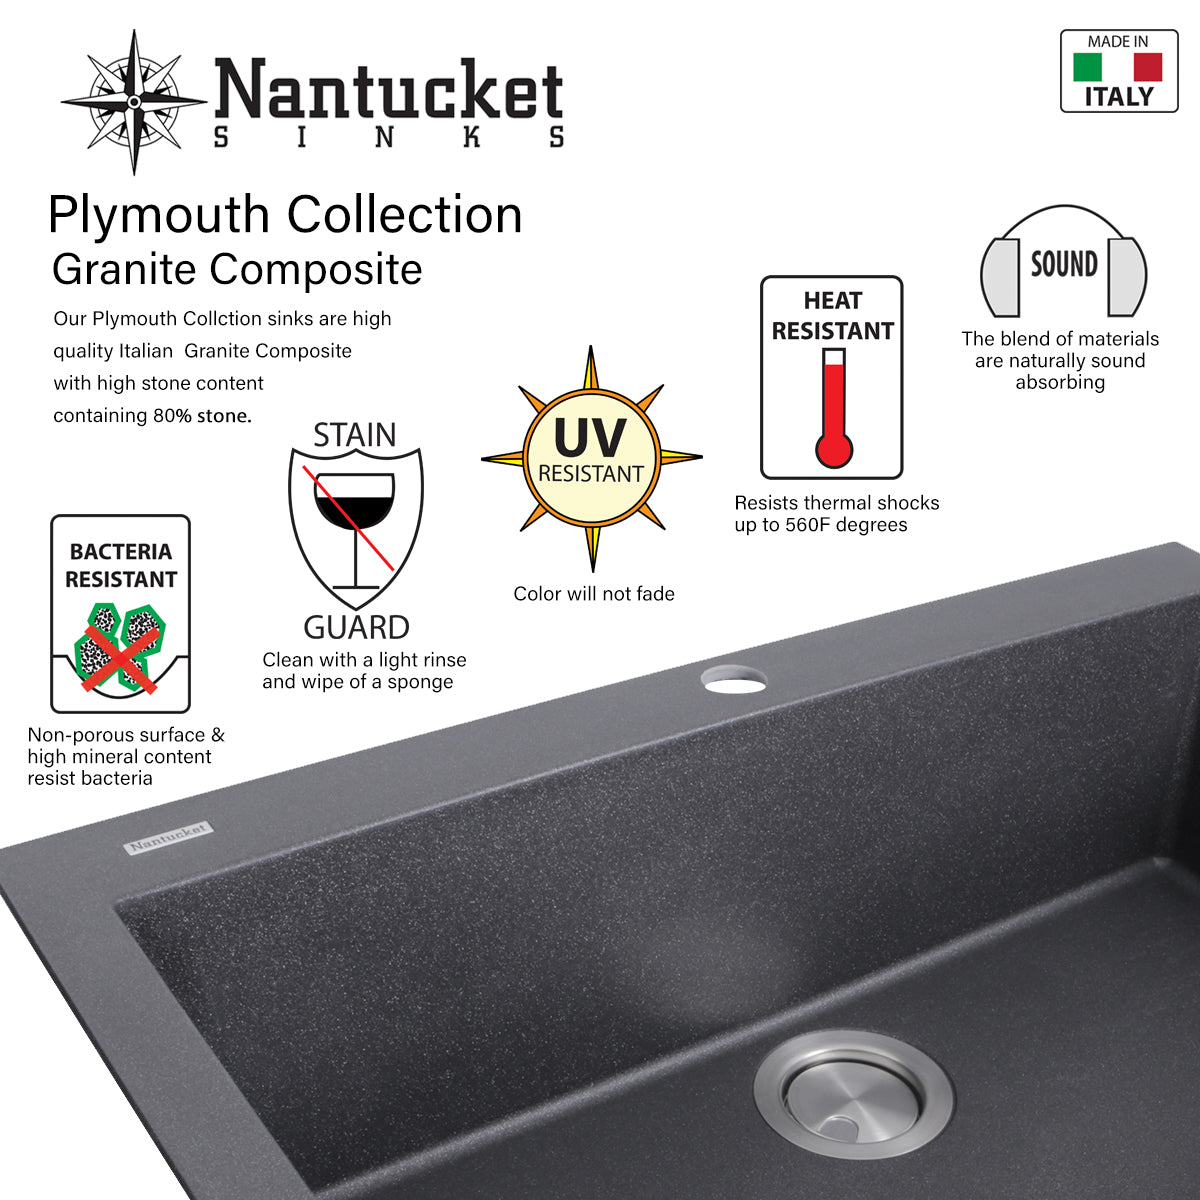 Nantucket Sinks 33-inch Undermount Granite Composite Sink in Truffle